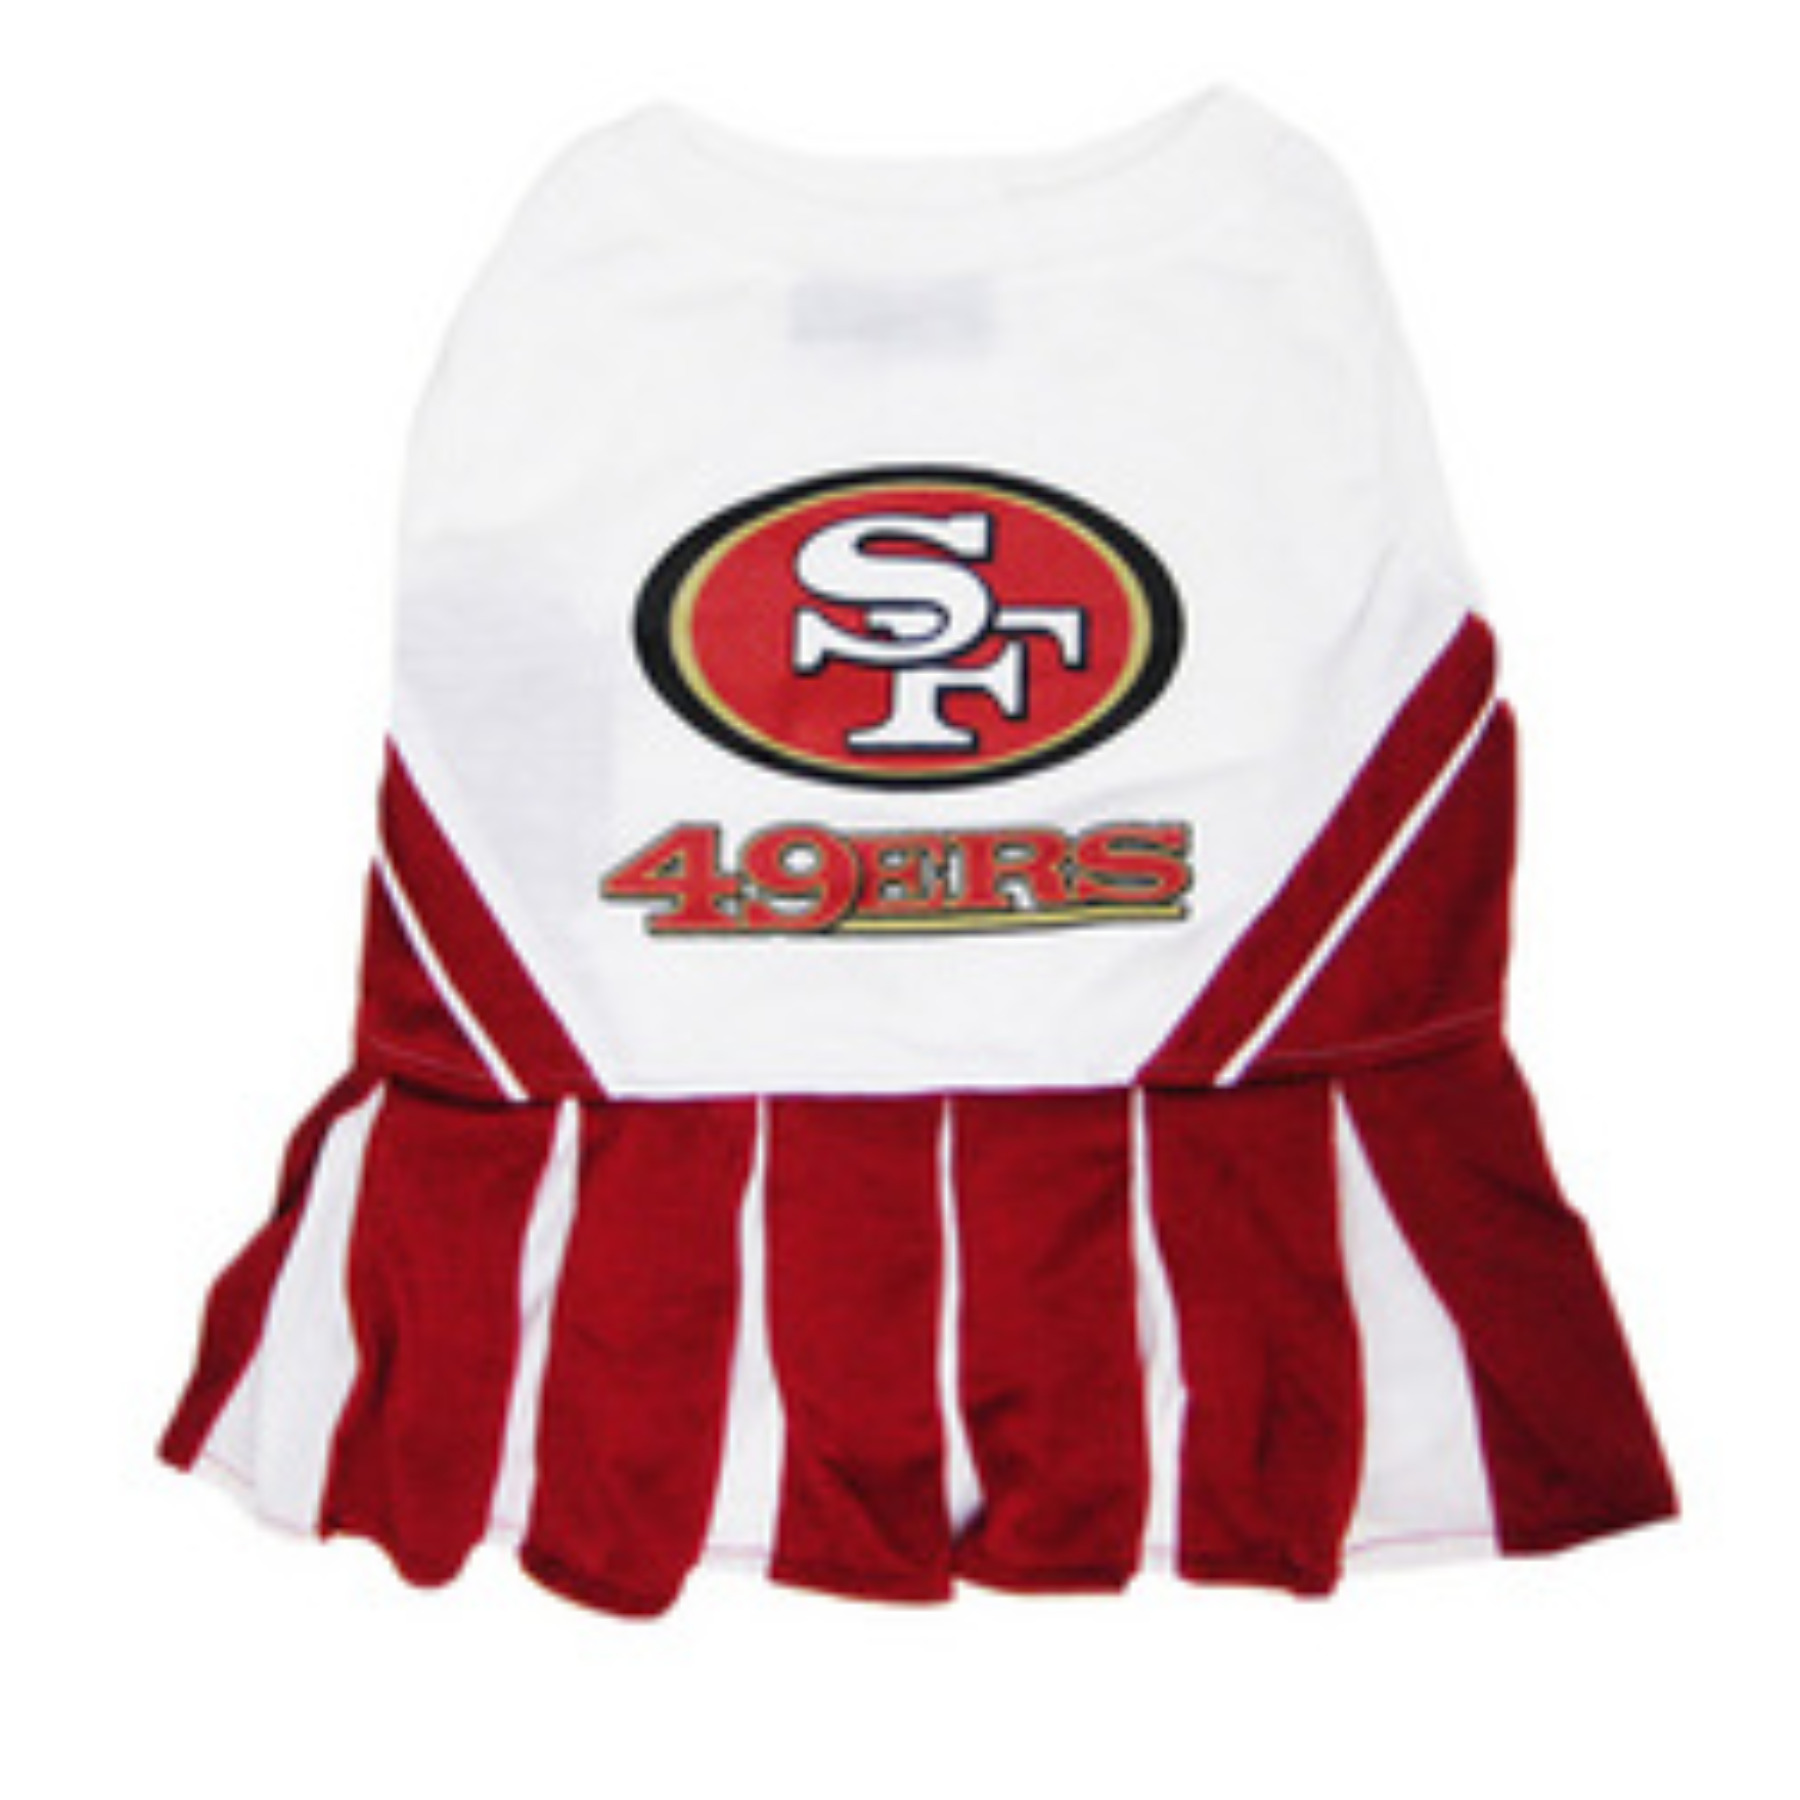 San Francisco 49ers Cheerleader Dog Dress